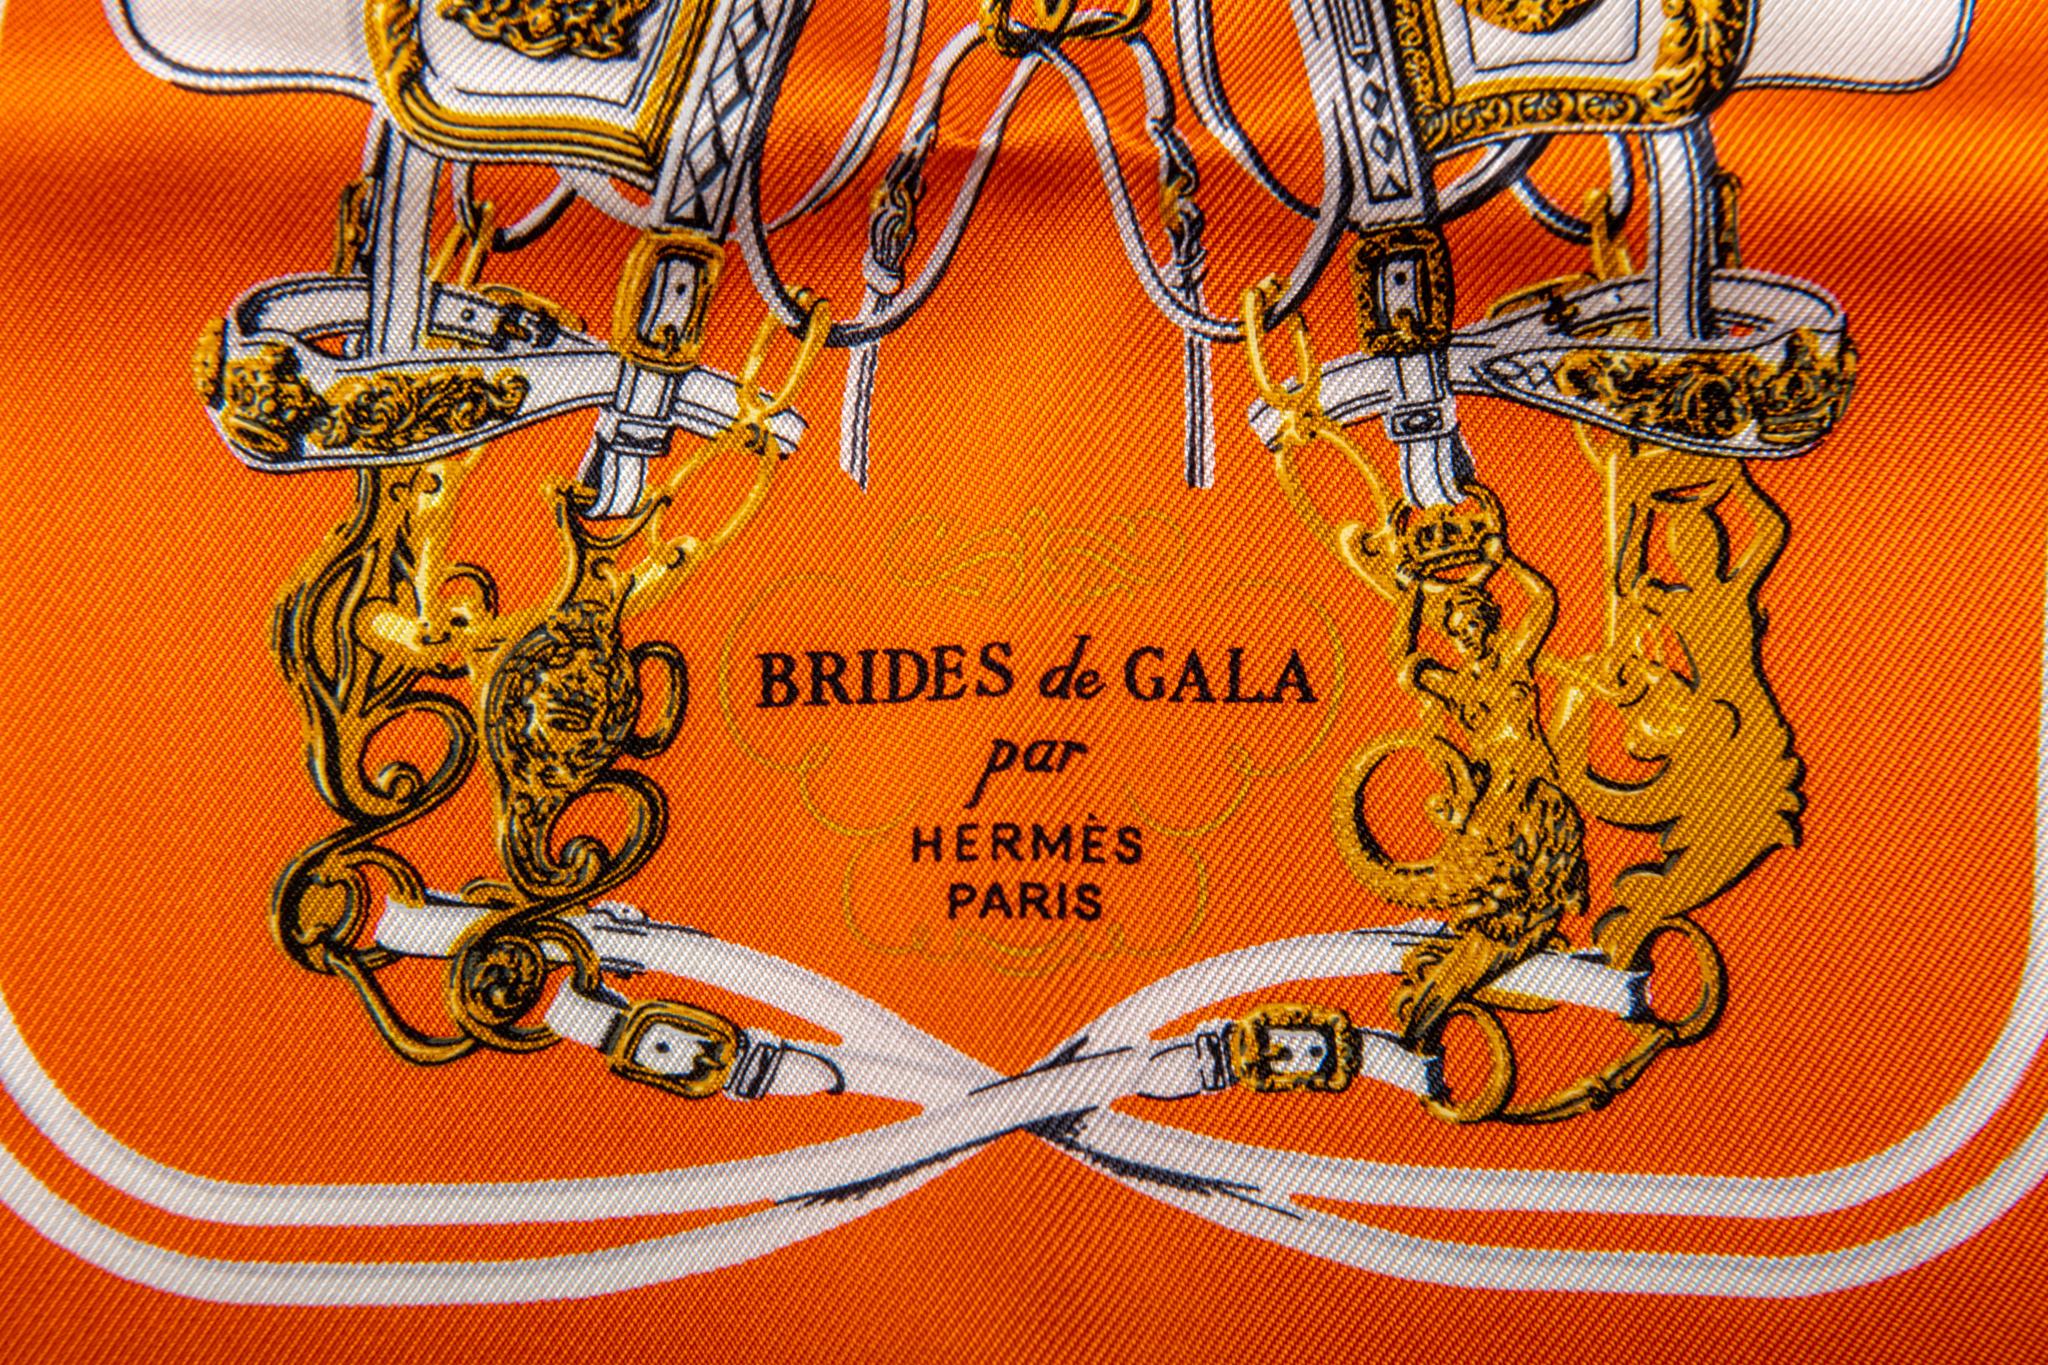 Hermès mini silk twill brides de gala square scarf. Hand-rolled edges. Brand new in box.